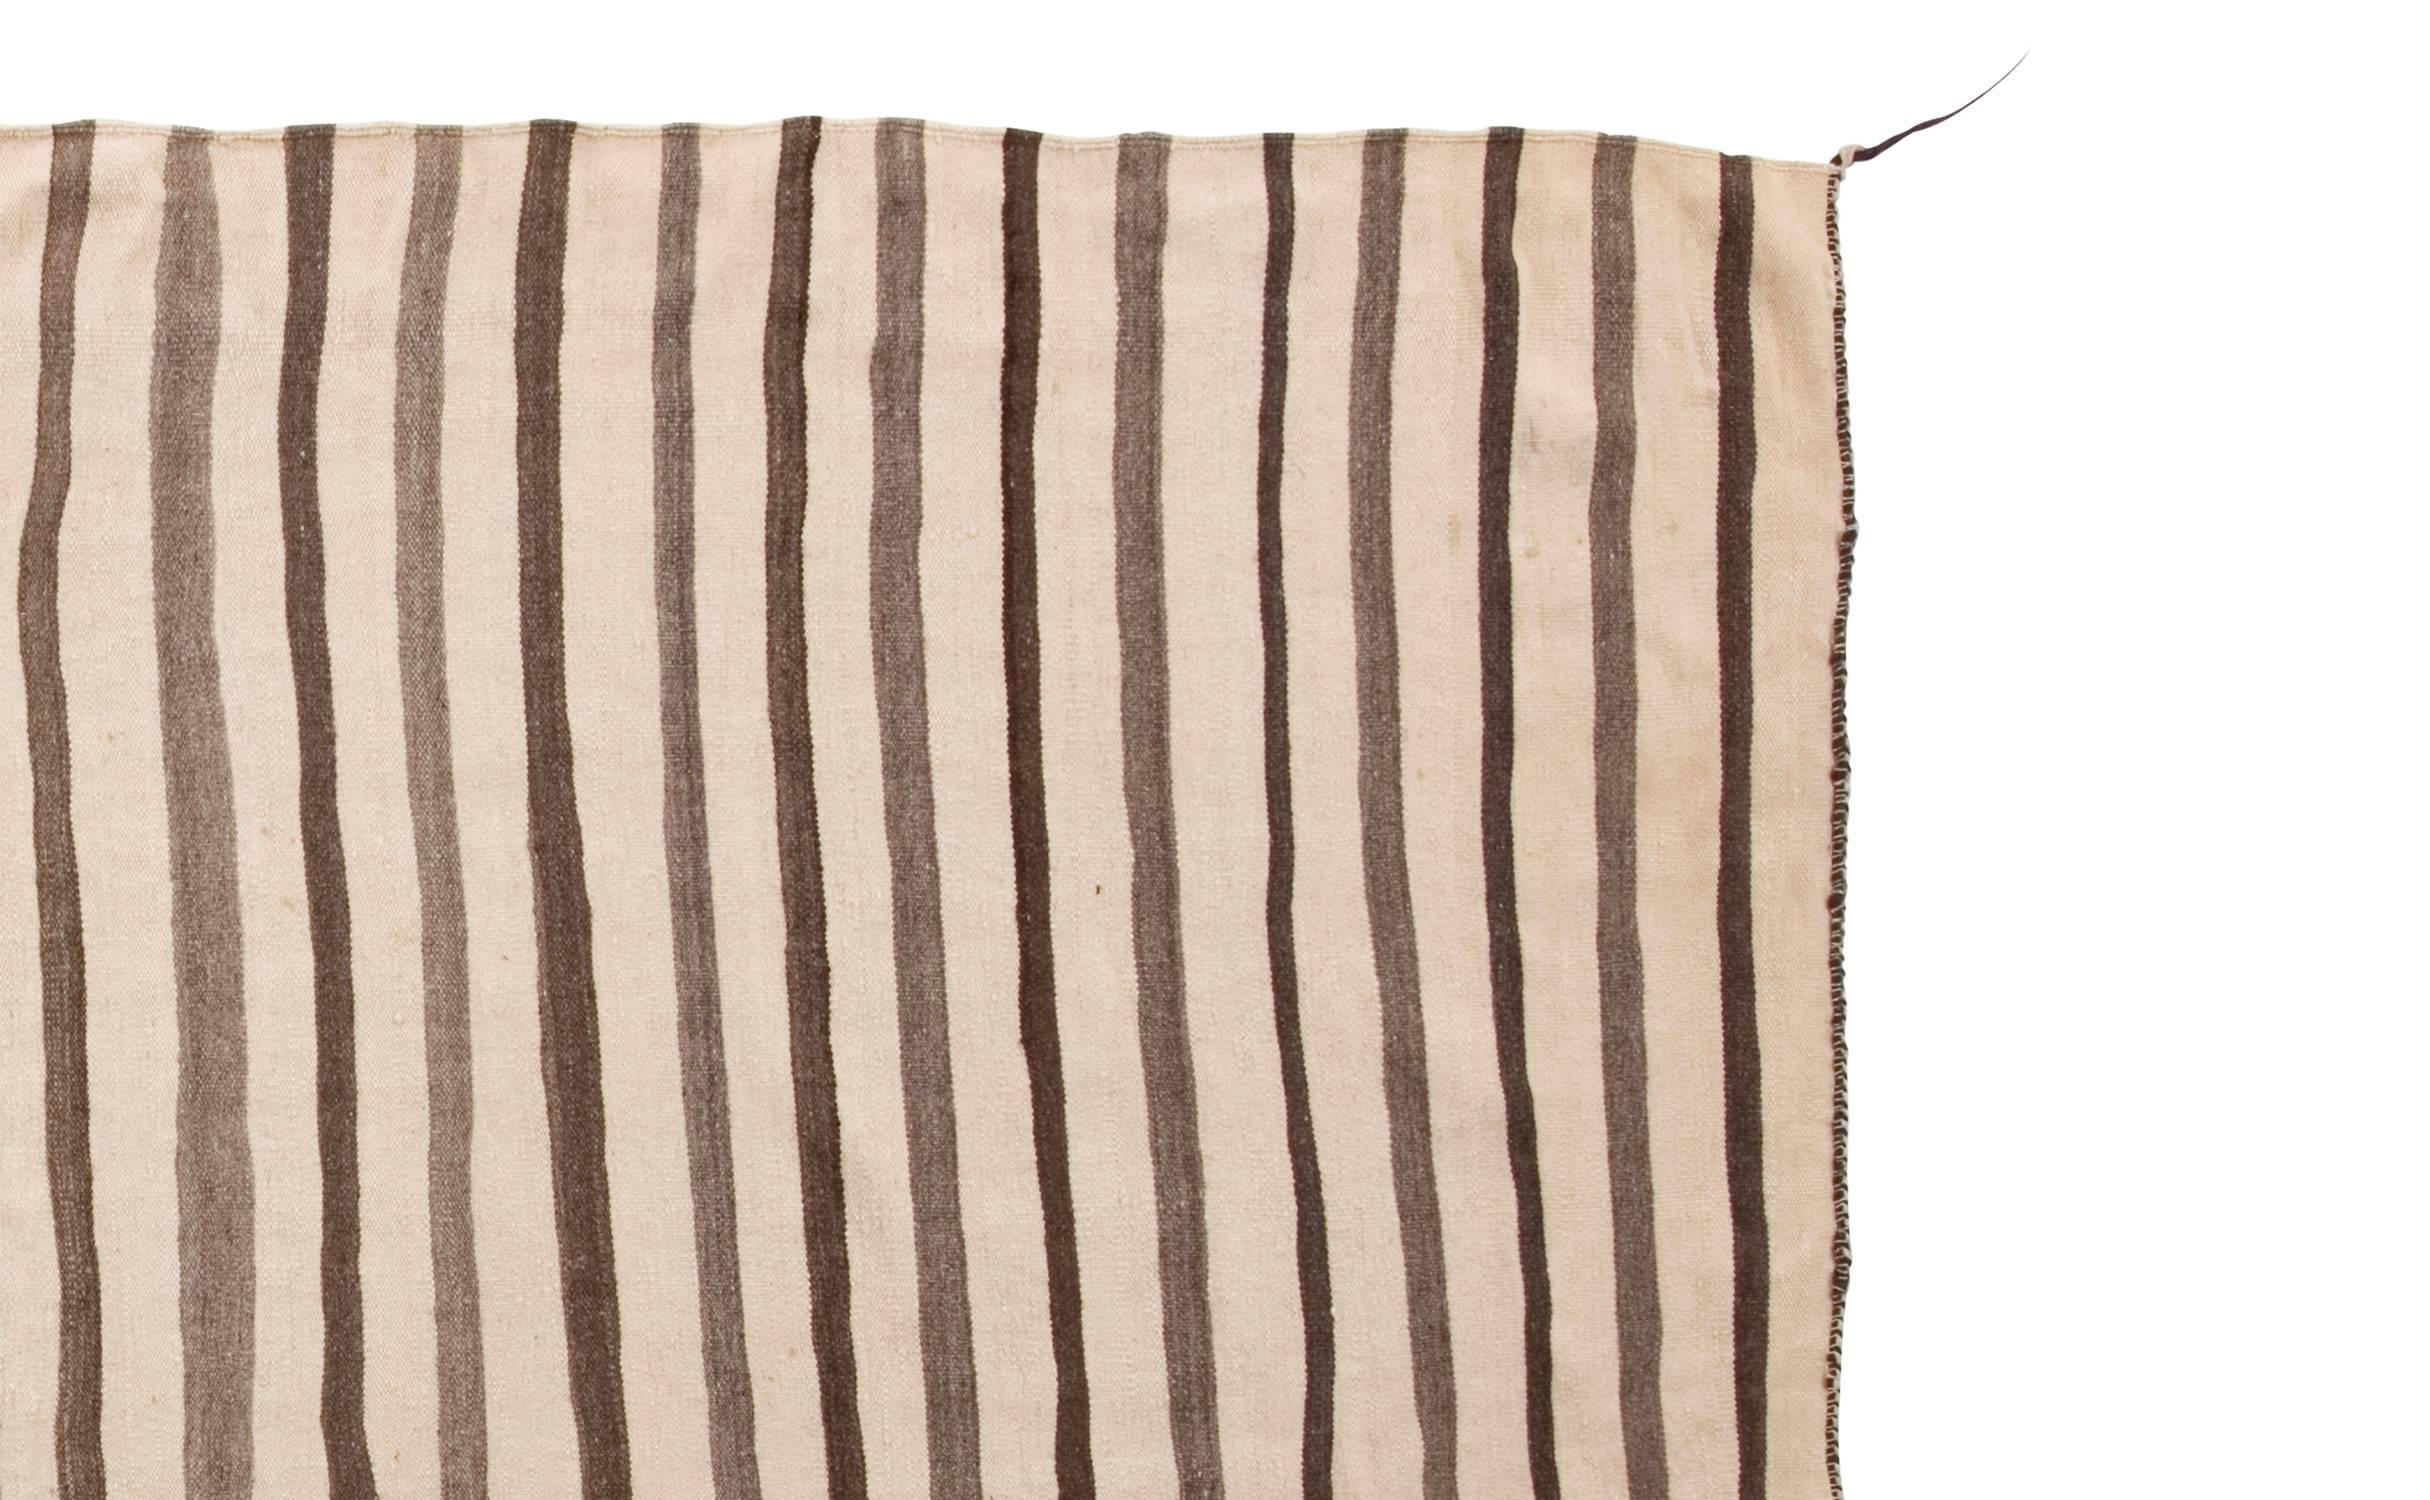 • One of a kind flat-weave blanket
• 100% lightweight wool
• Measures: 6'10